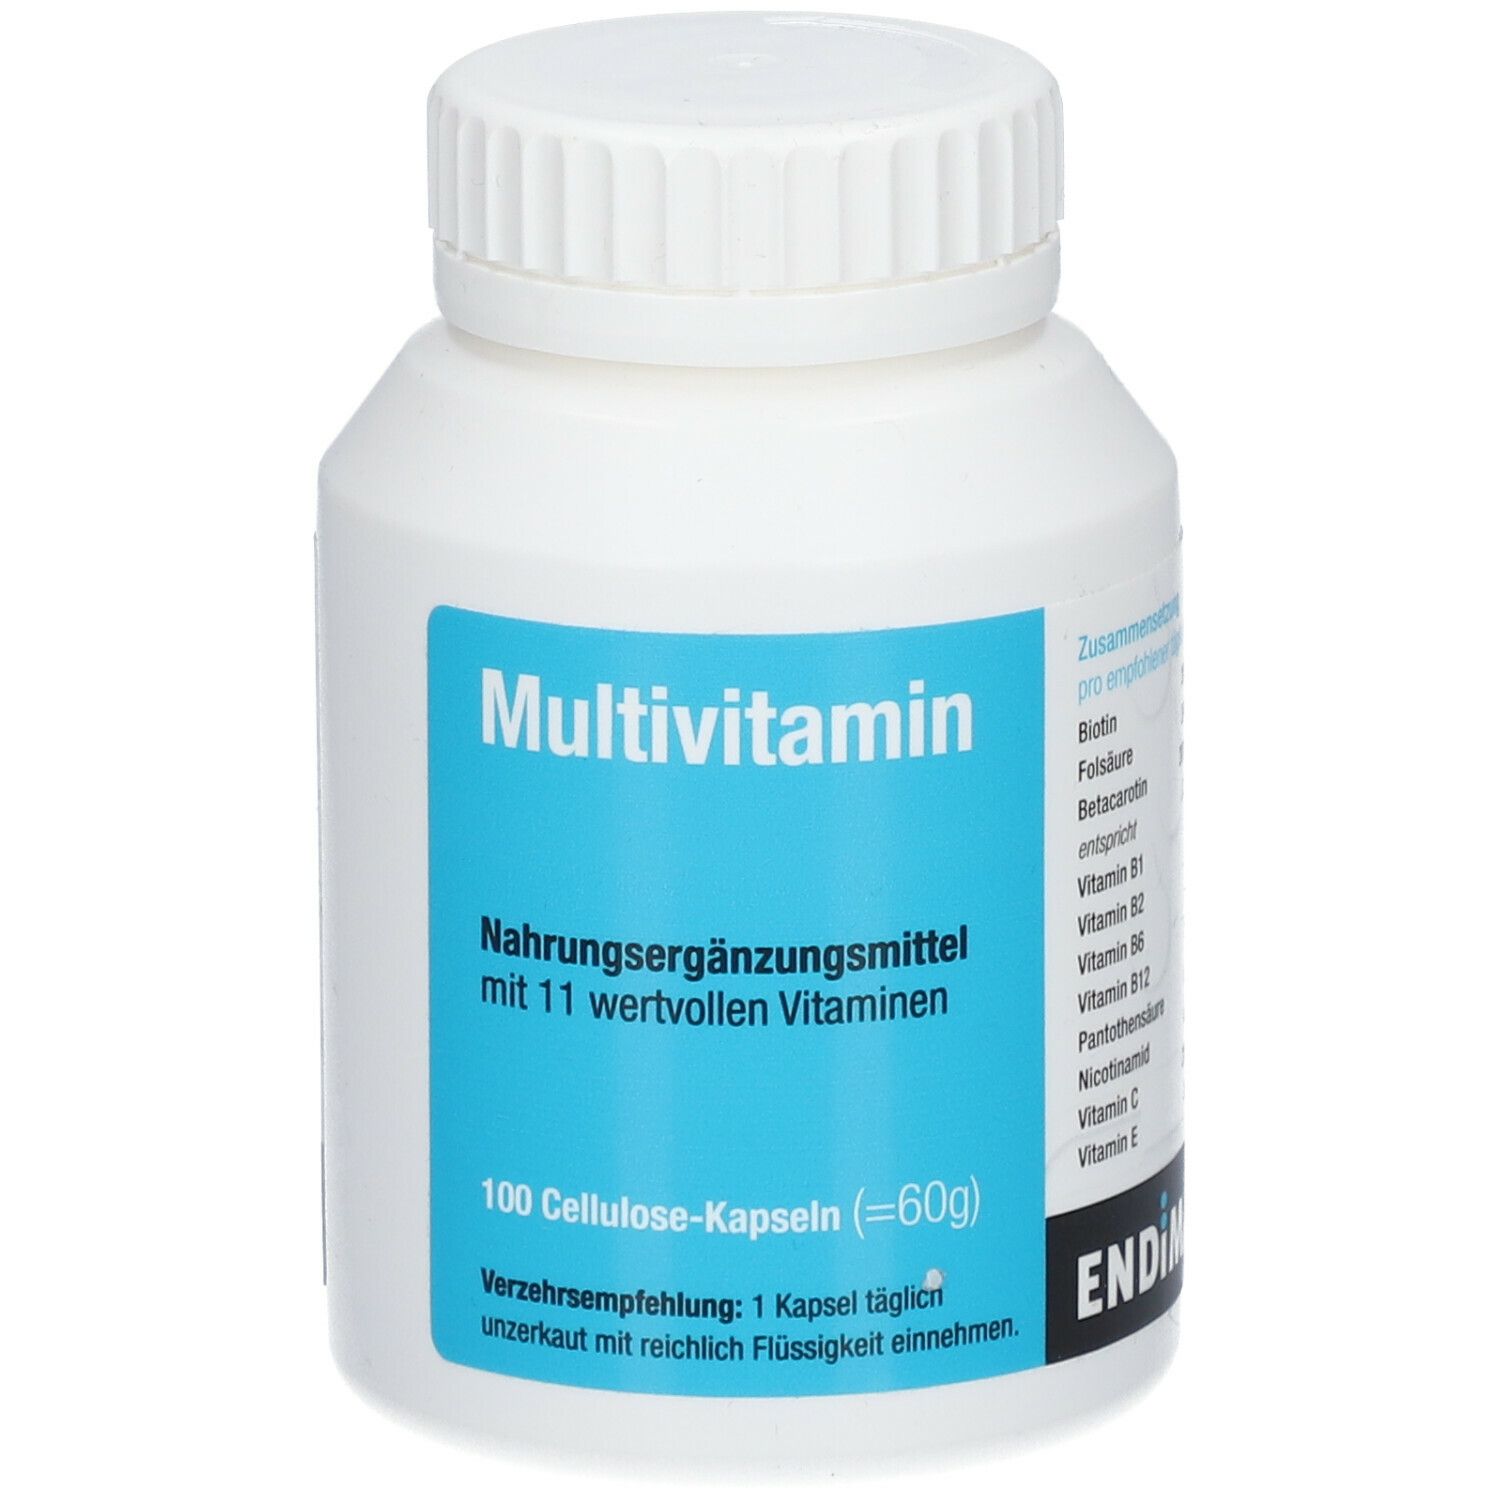 Endima® Multivitamin